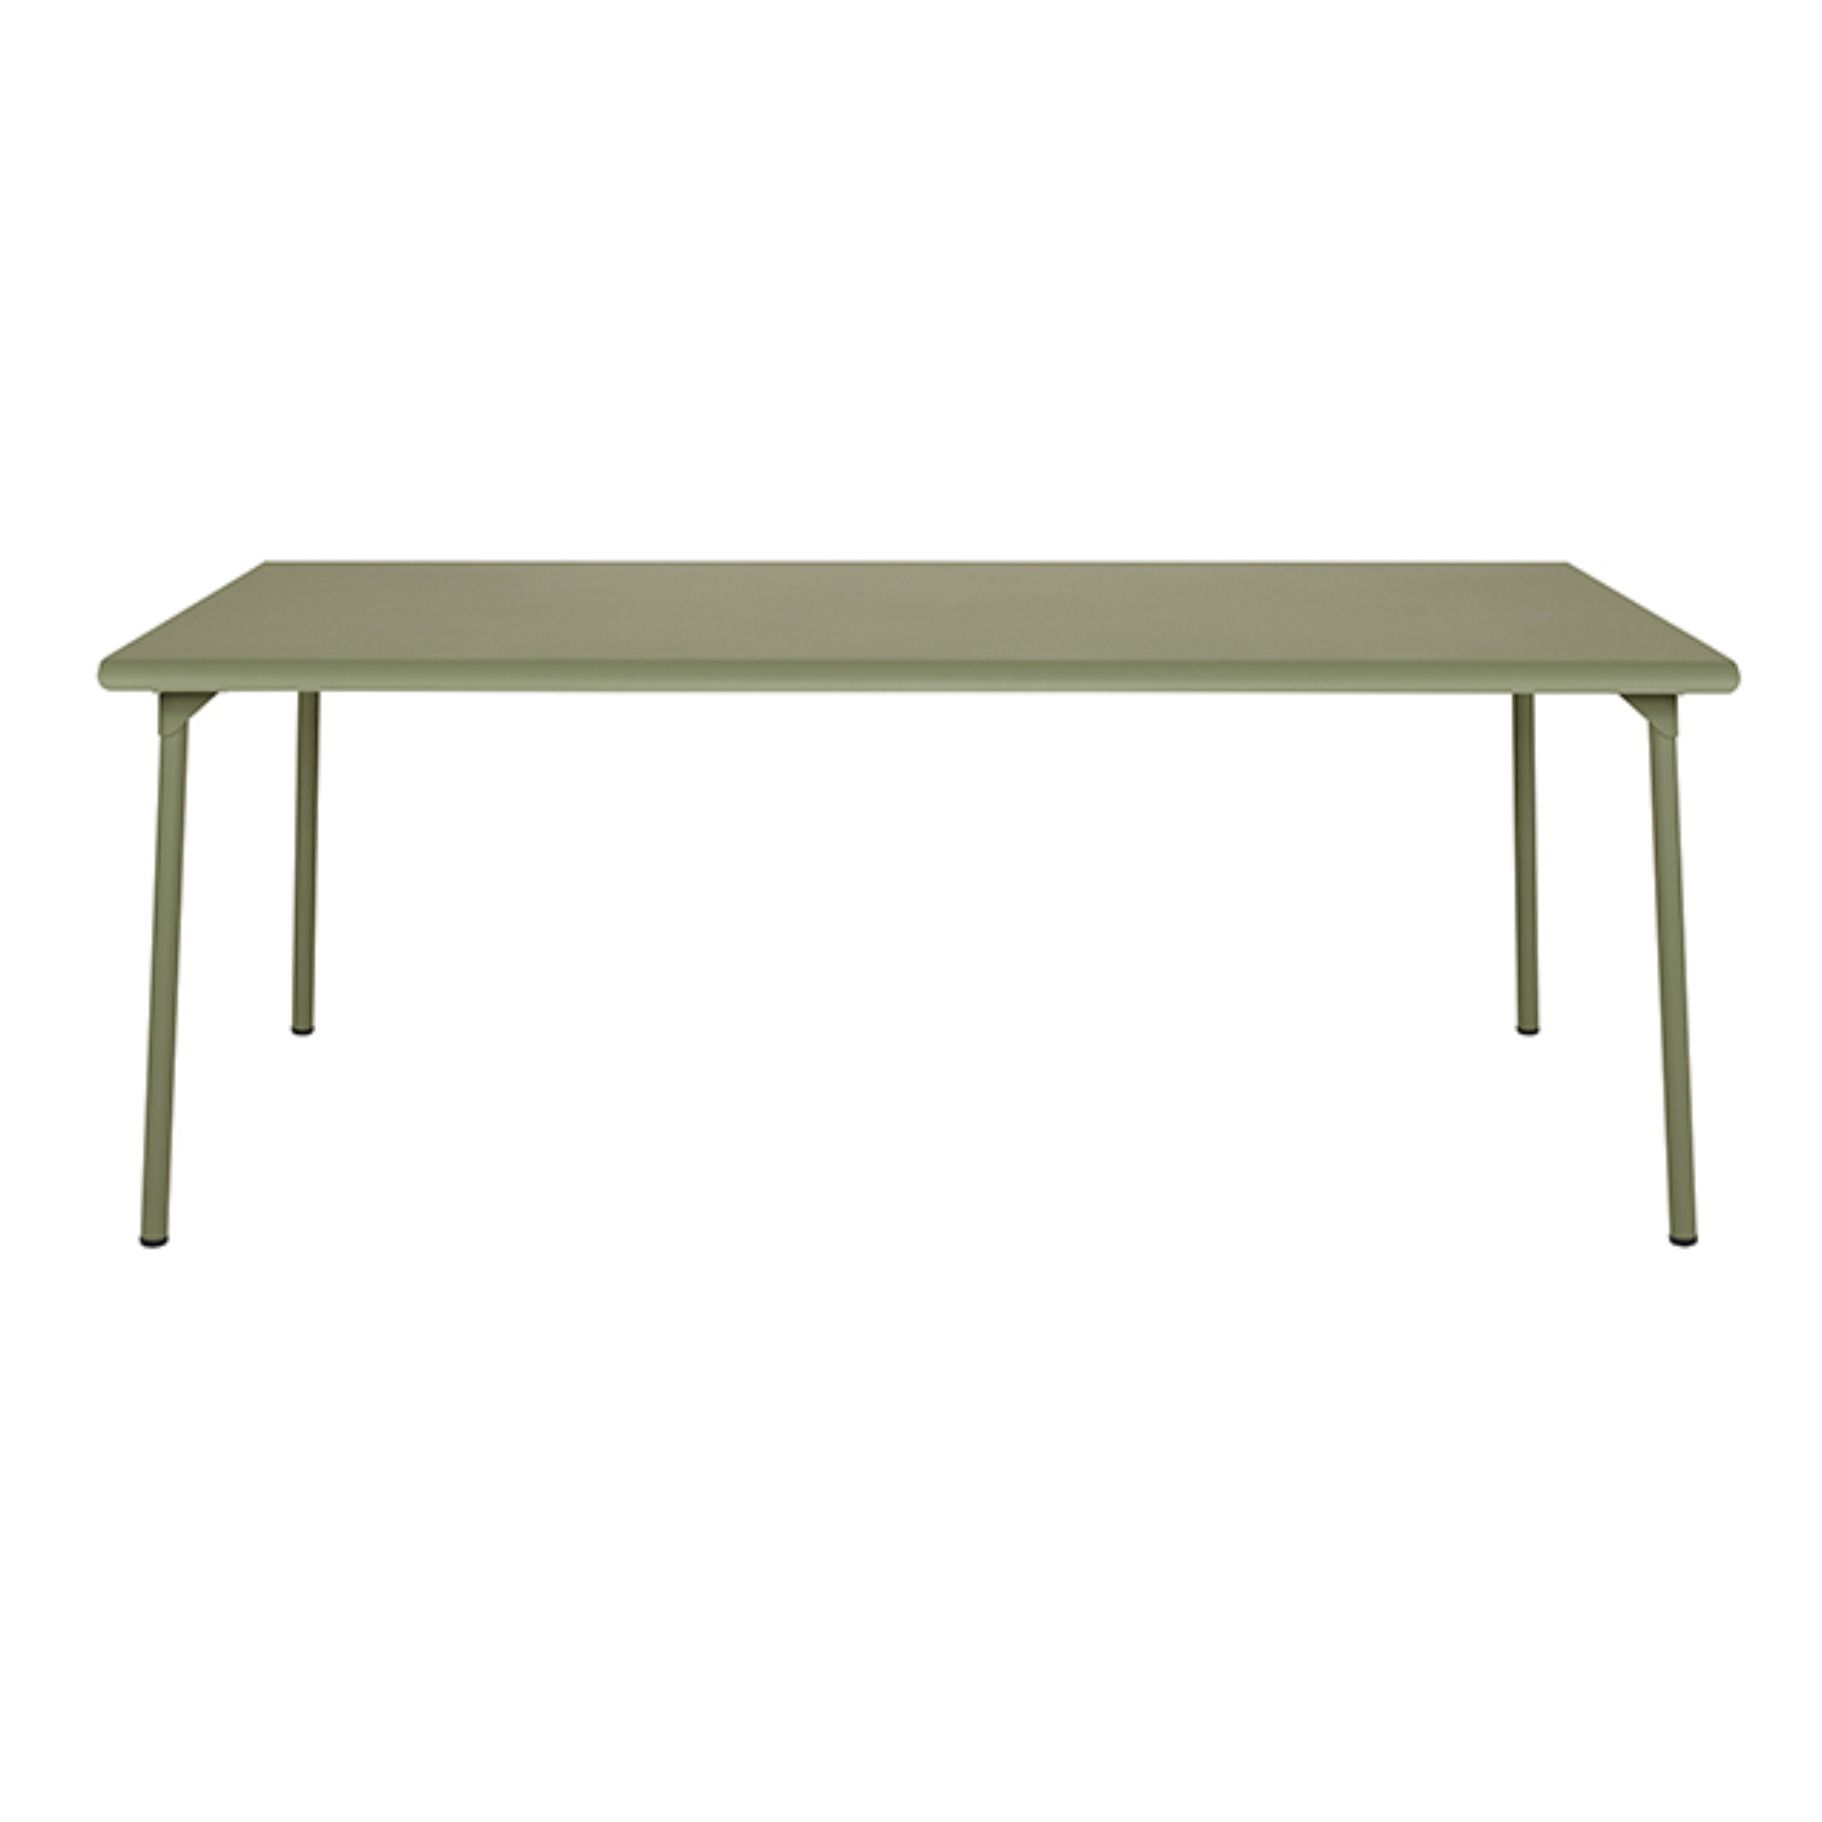 Tolix - Table outdoor Patio en inox - 200x100 cm - Olive